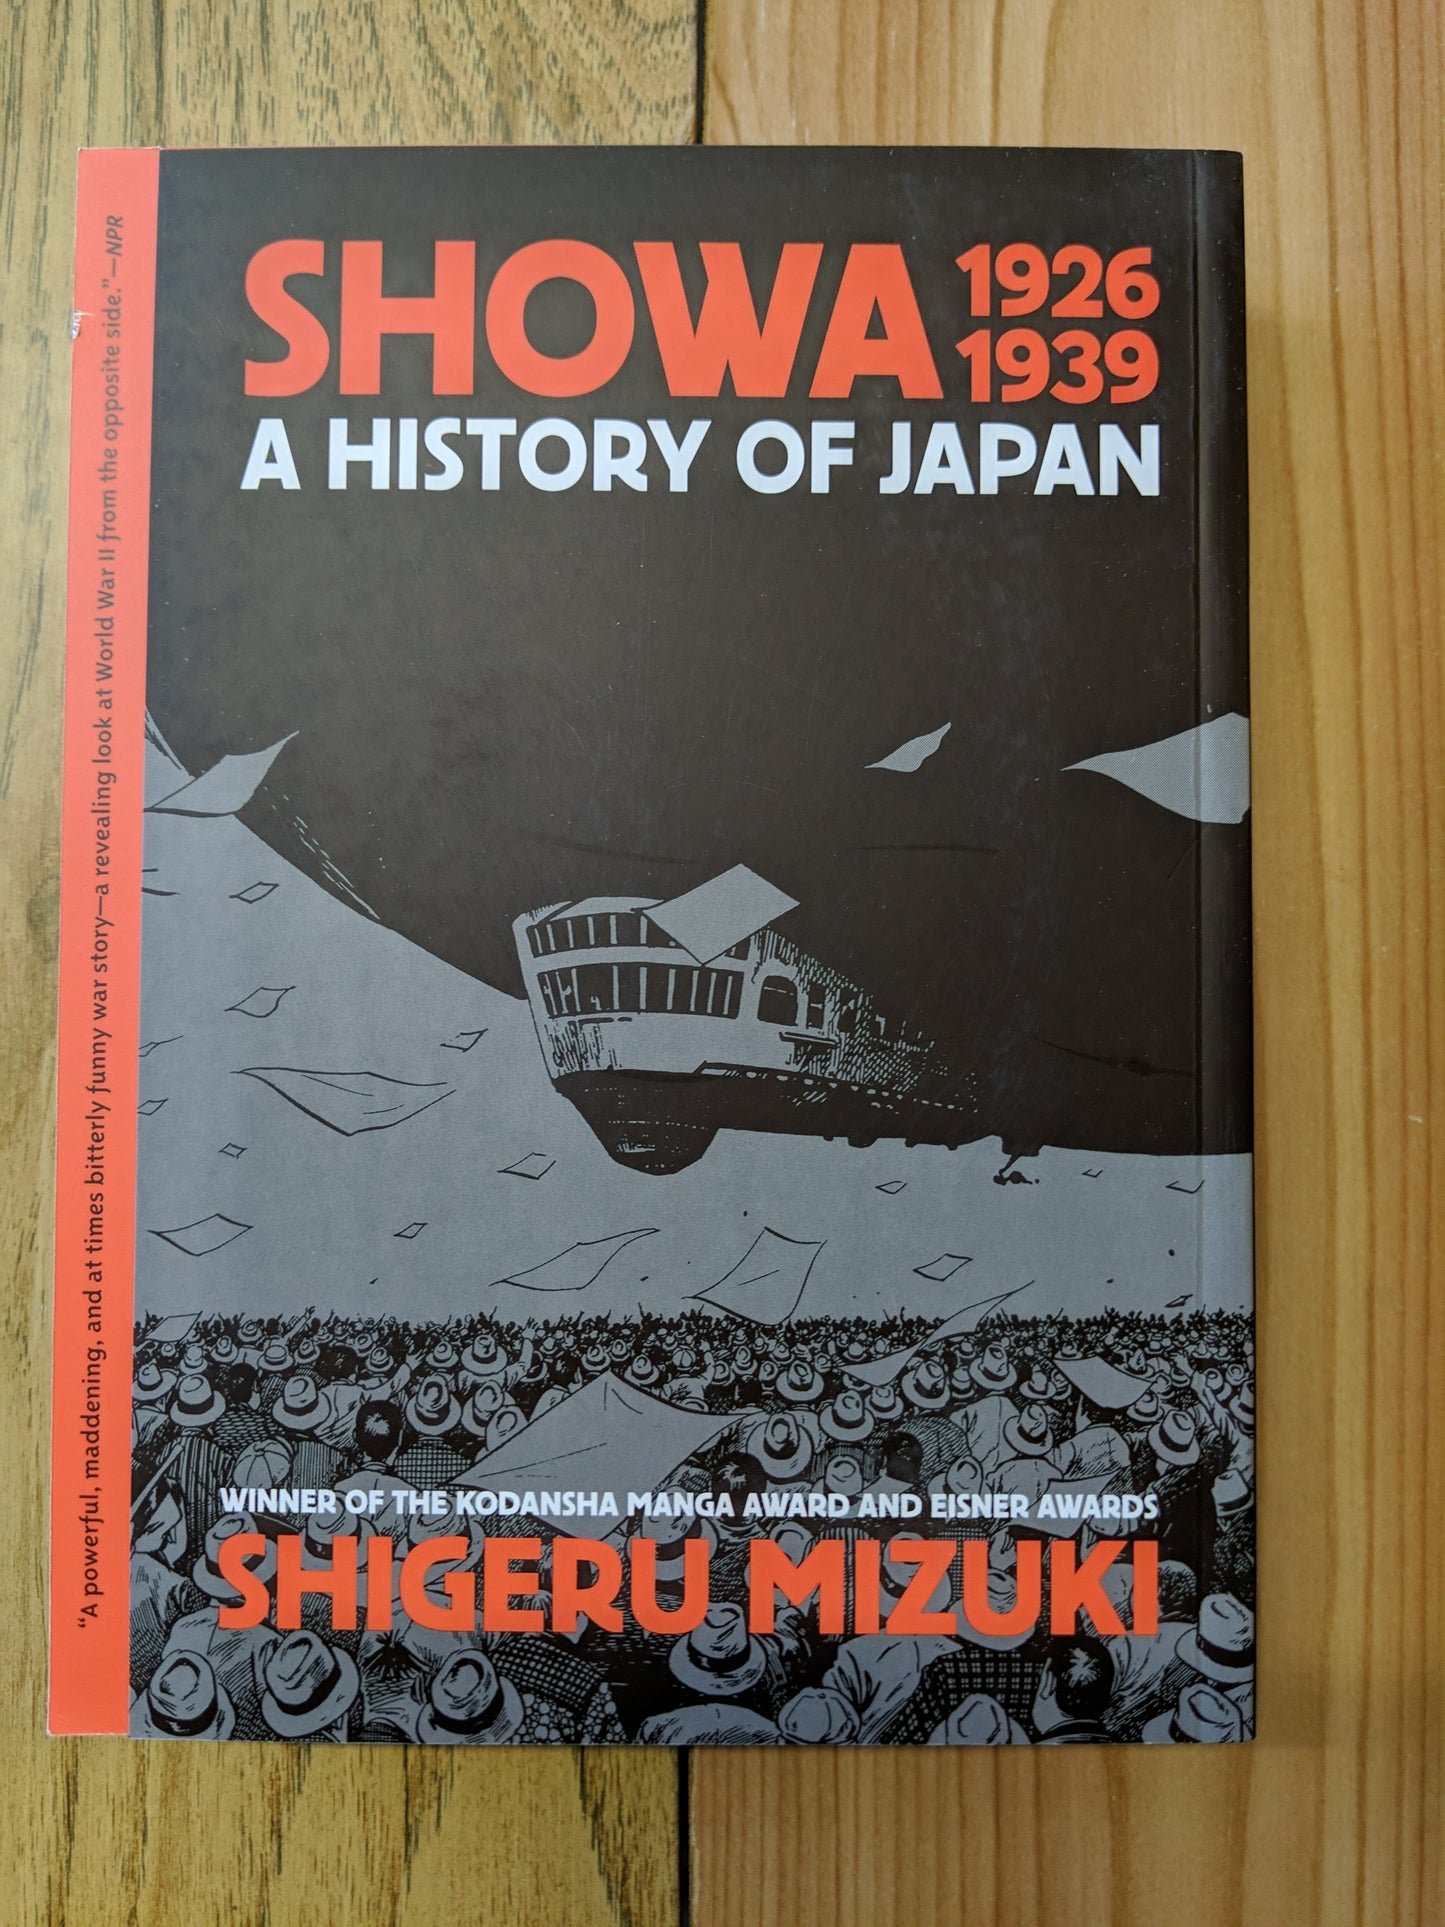 Showa: A History of Japan, 1926-1939